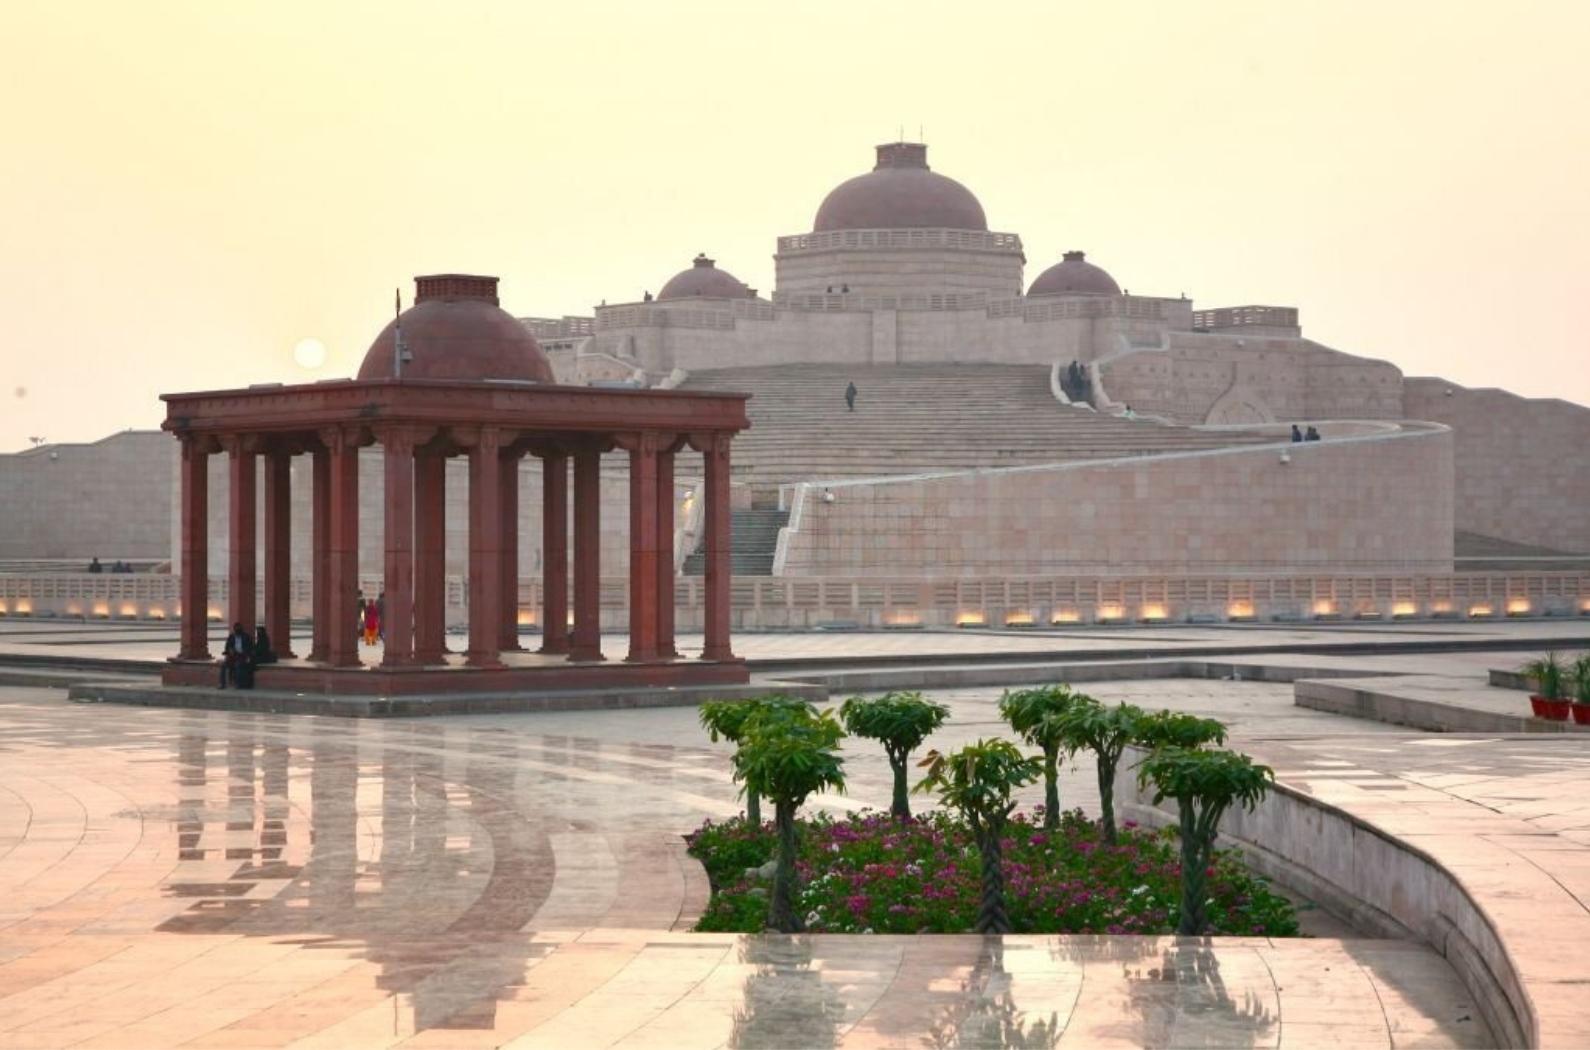 Ambedkar Memorial Park is a public park and memorial in Lucknow Uttar Pradesh India